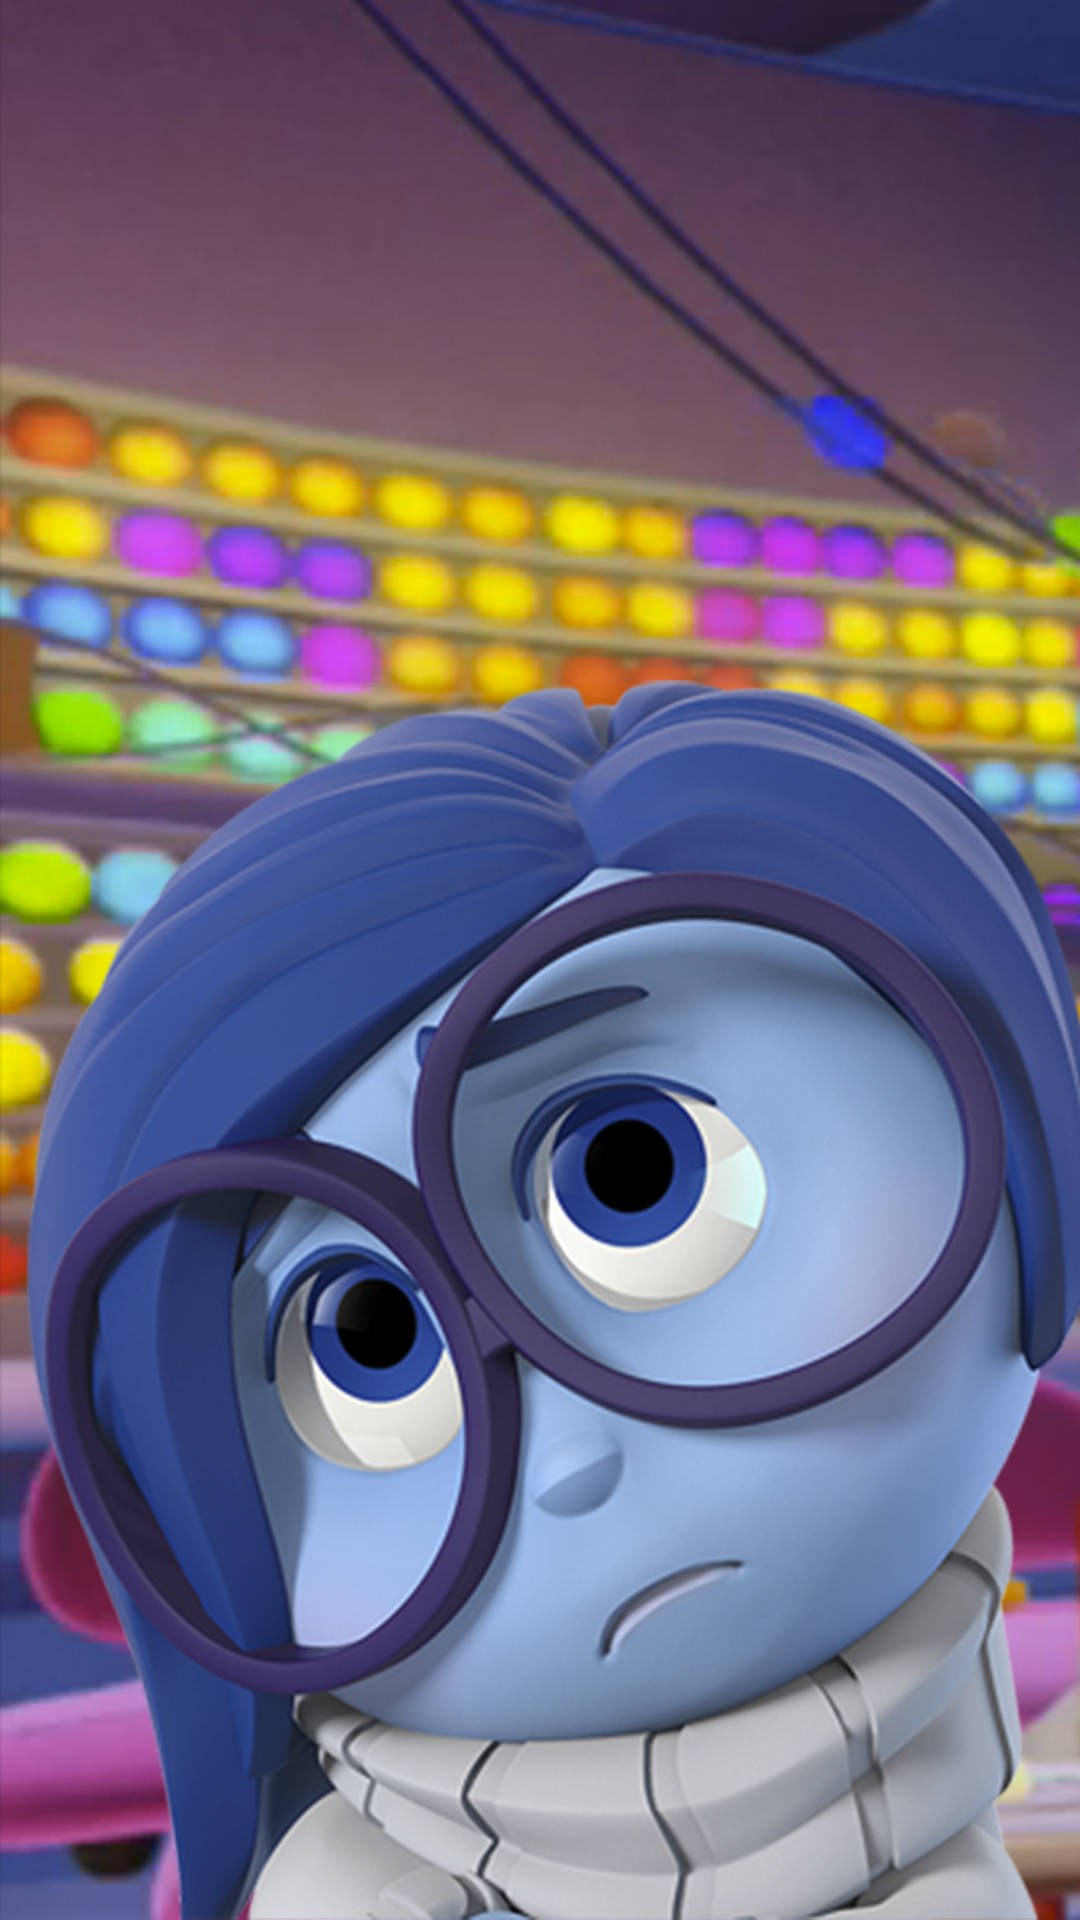 Sadness From Disney Pixar's Inside Out Feeling Overwhelmed.